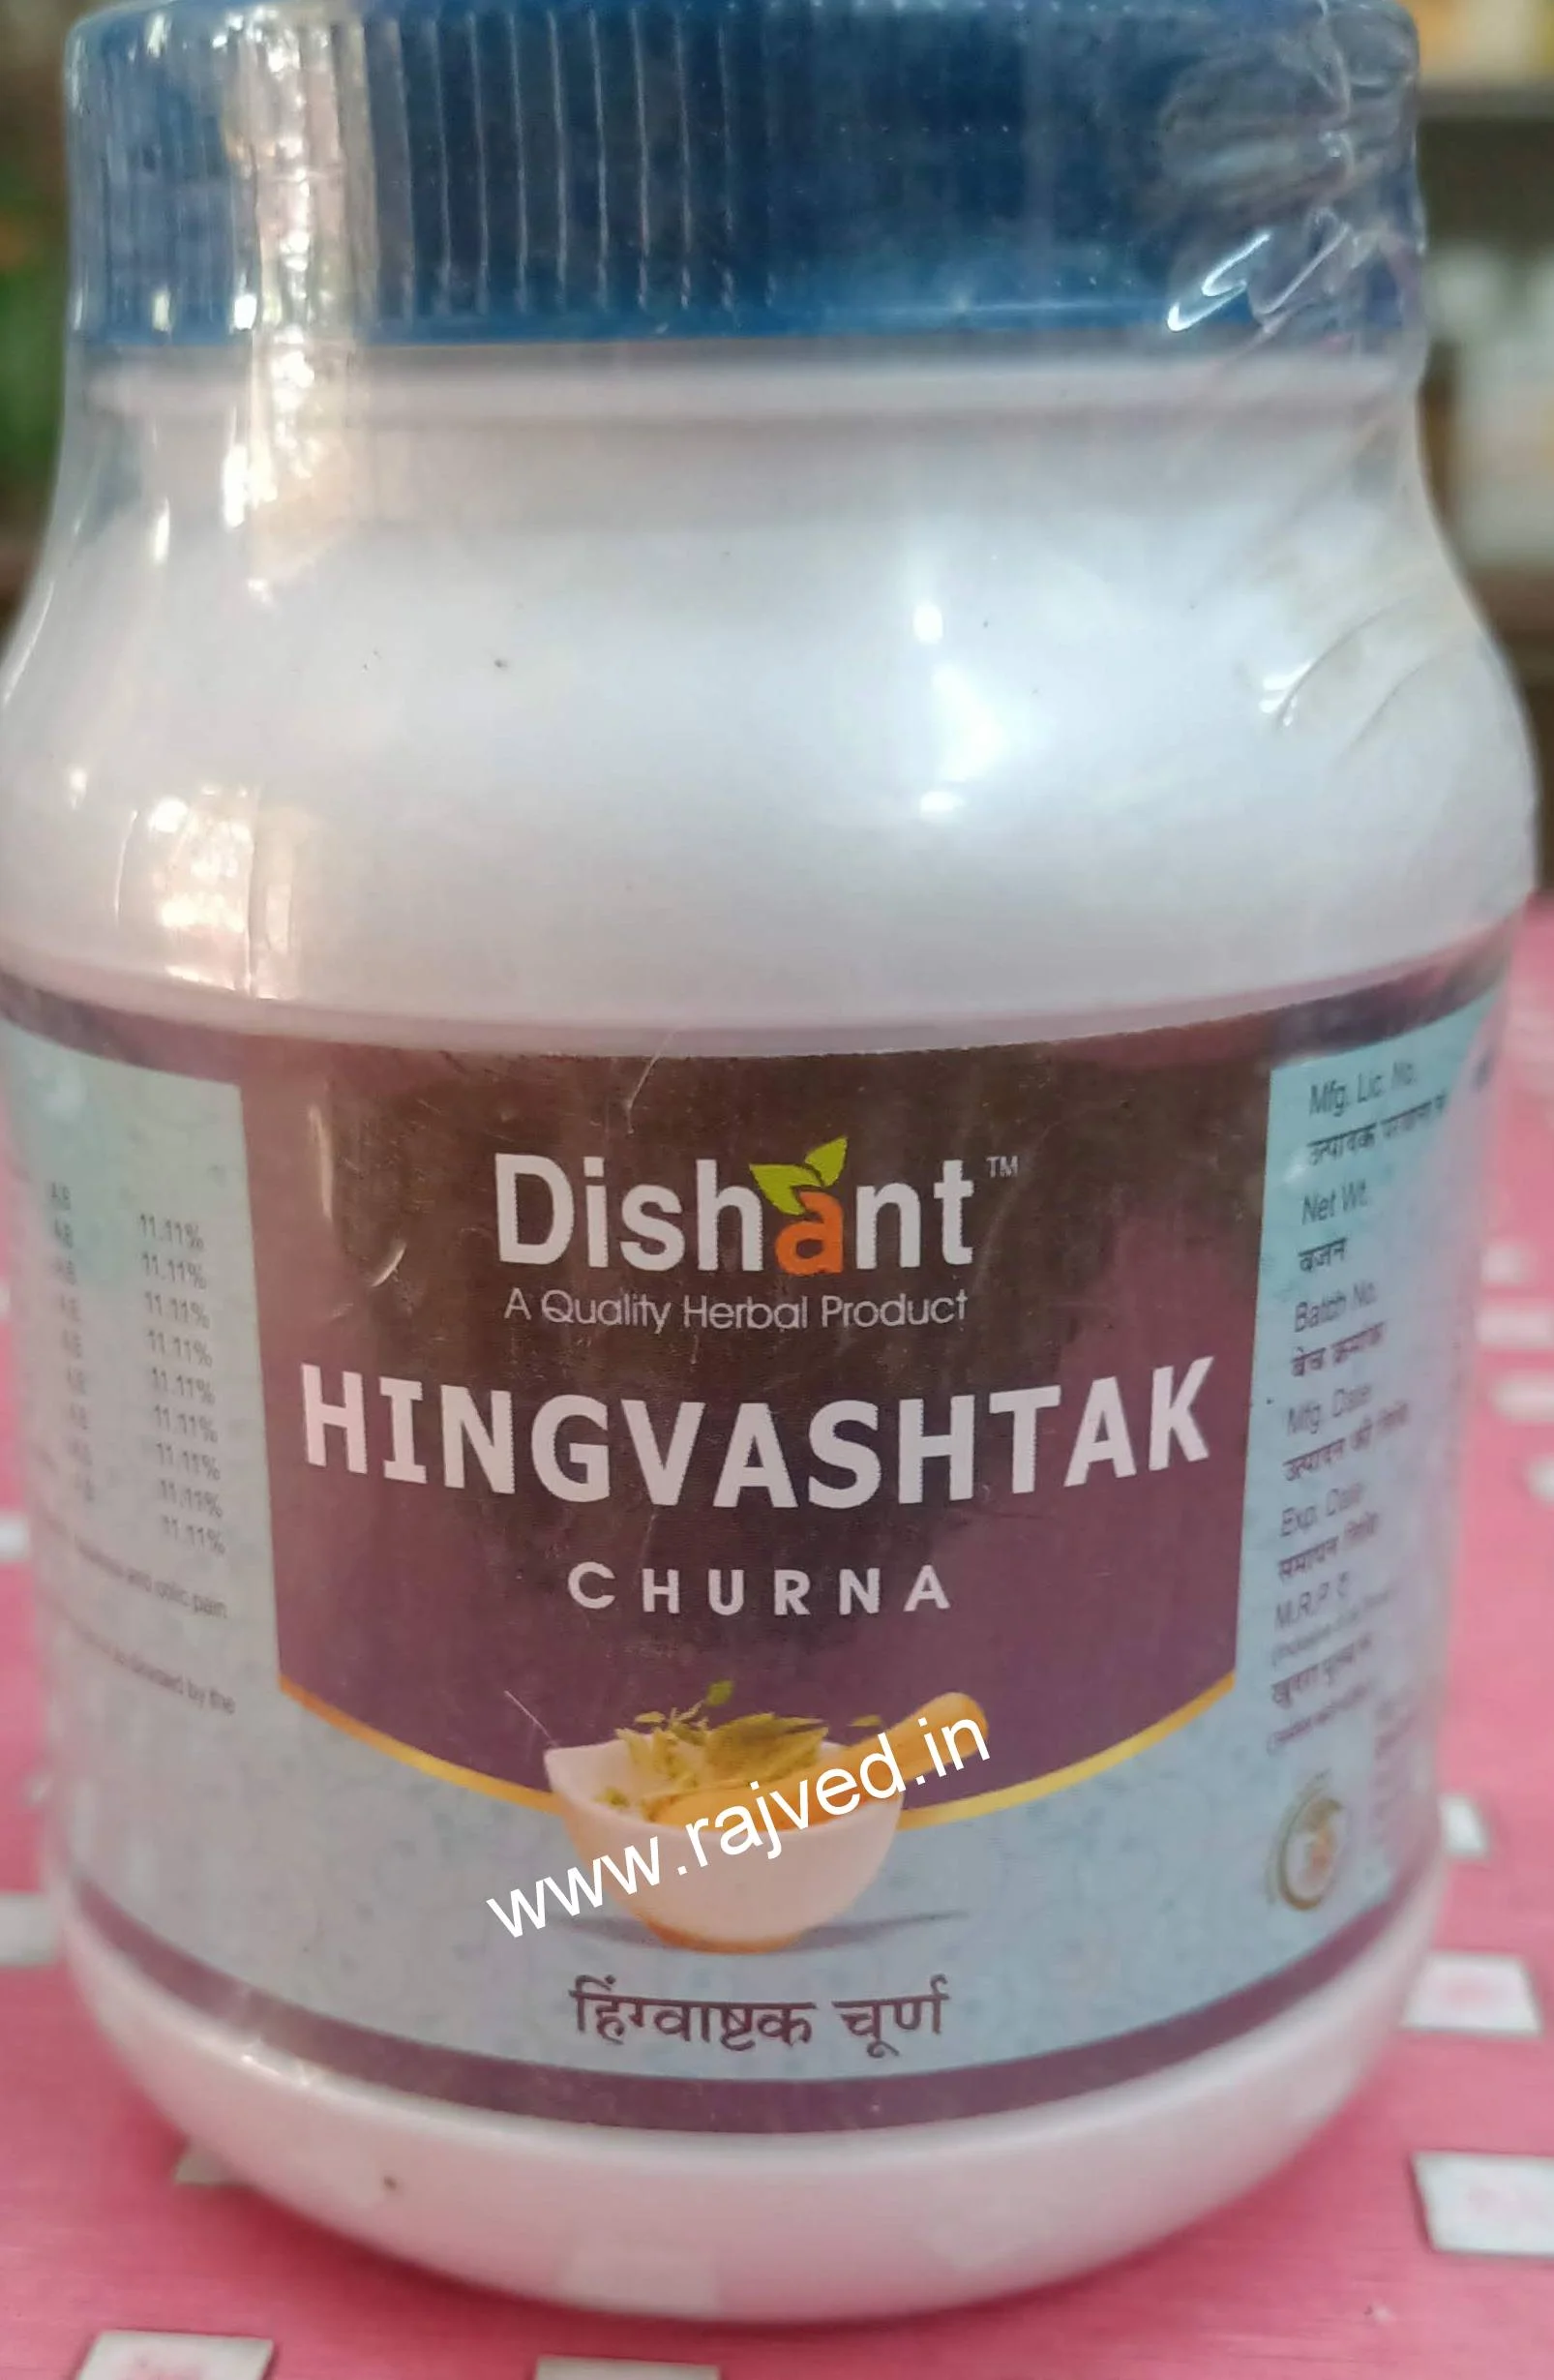 hingvashtak churna 500gm upto 20% off dishant ayurvedic suppliers